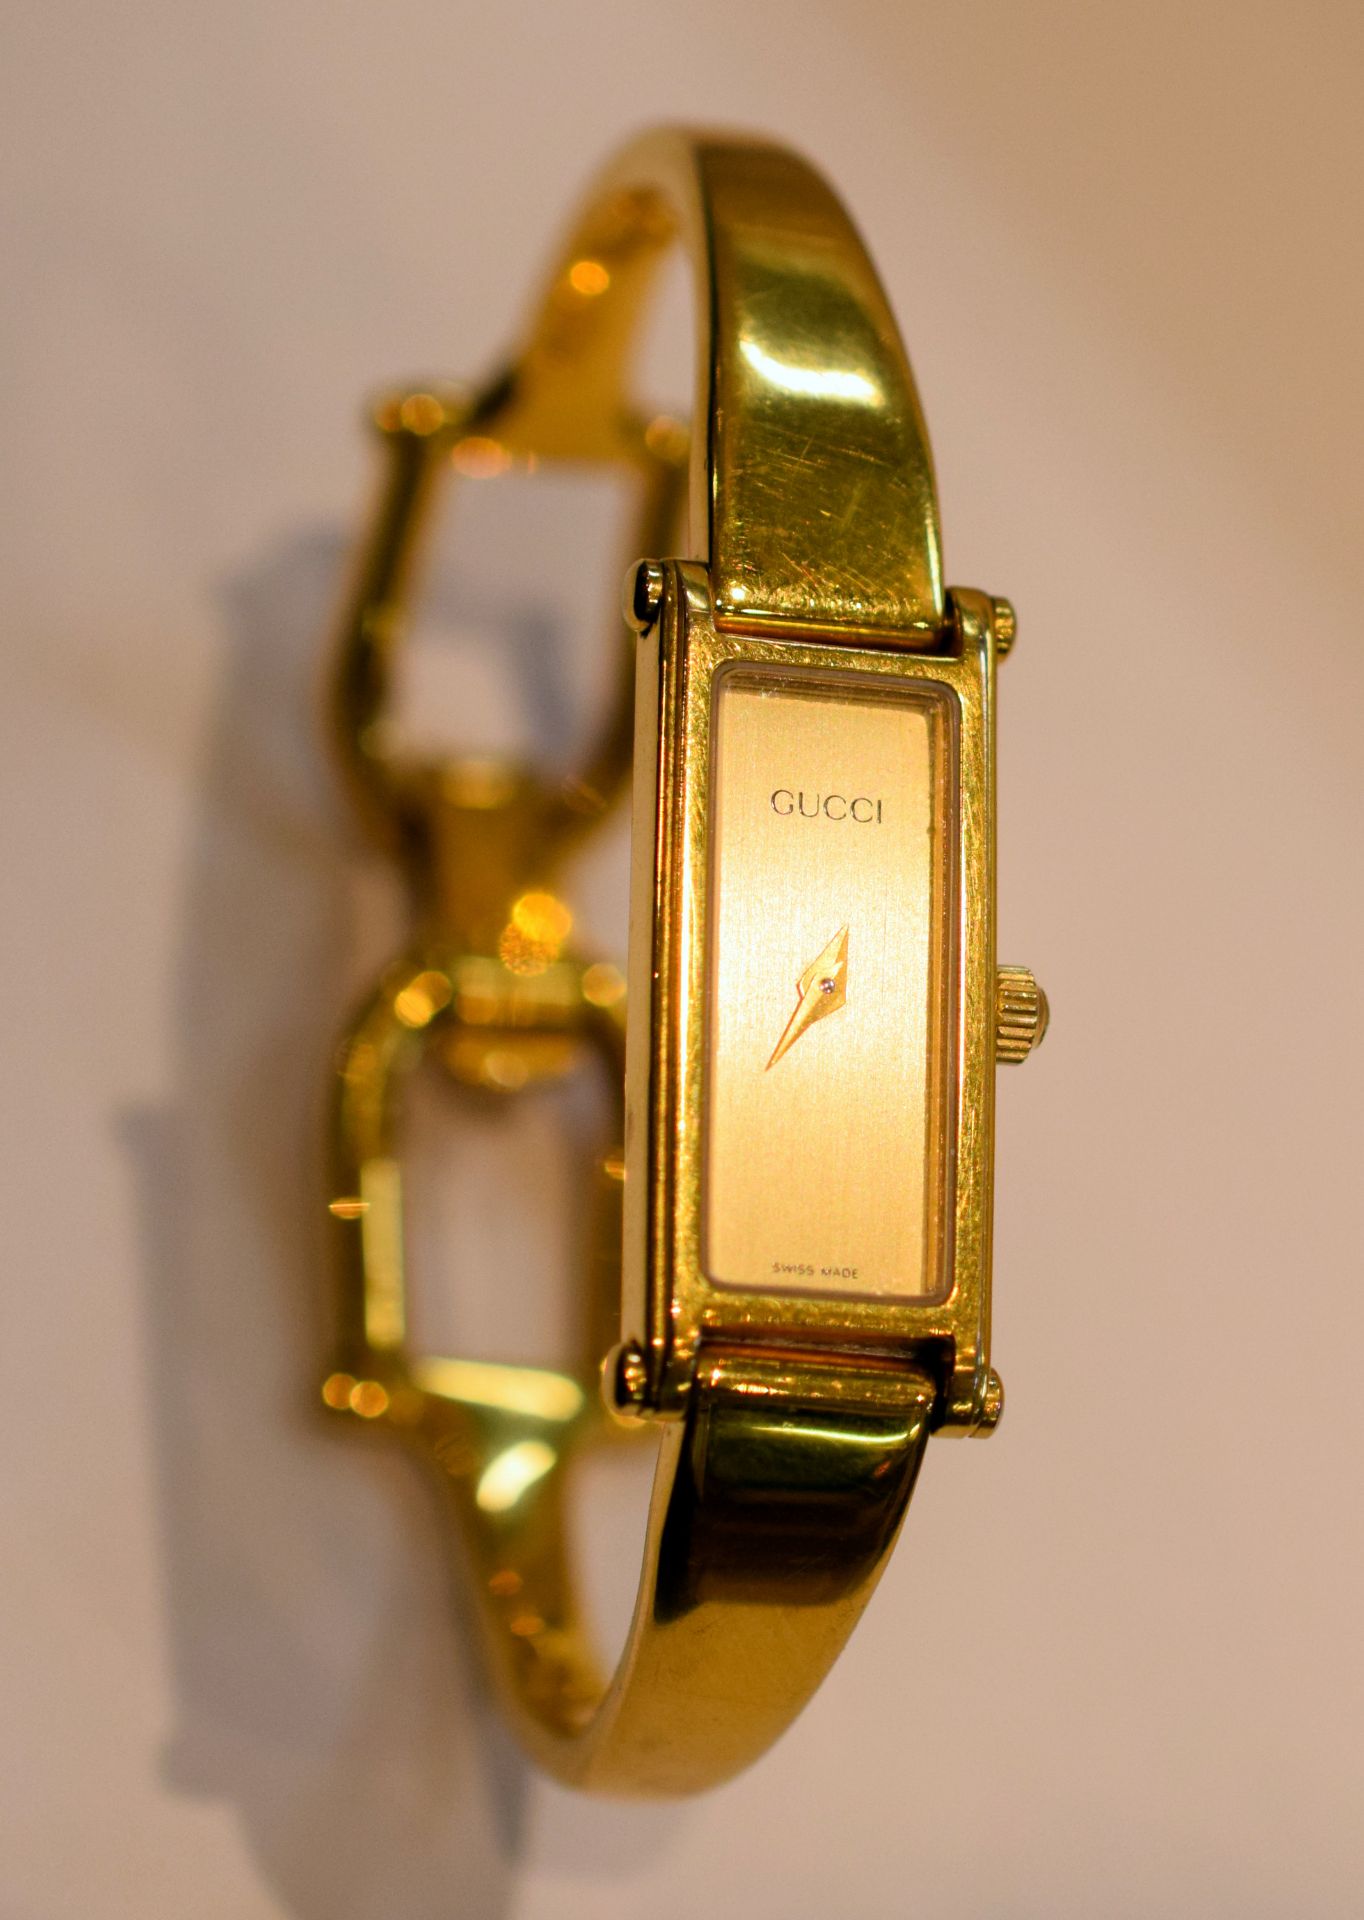 Ladies Gold-Plated Gucci Quartz Watch On Bracelet - Image 6 of 6